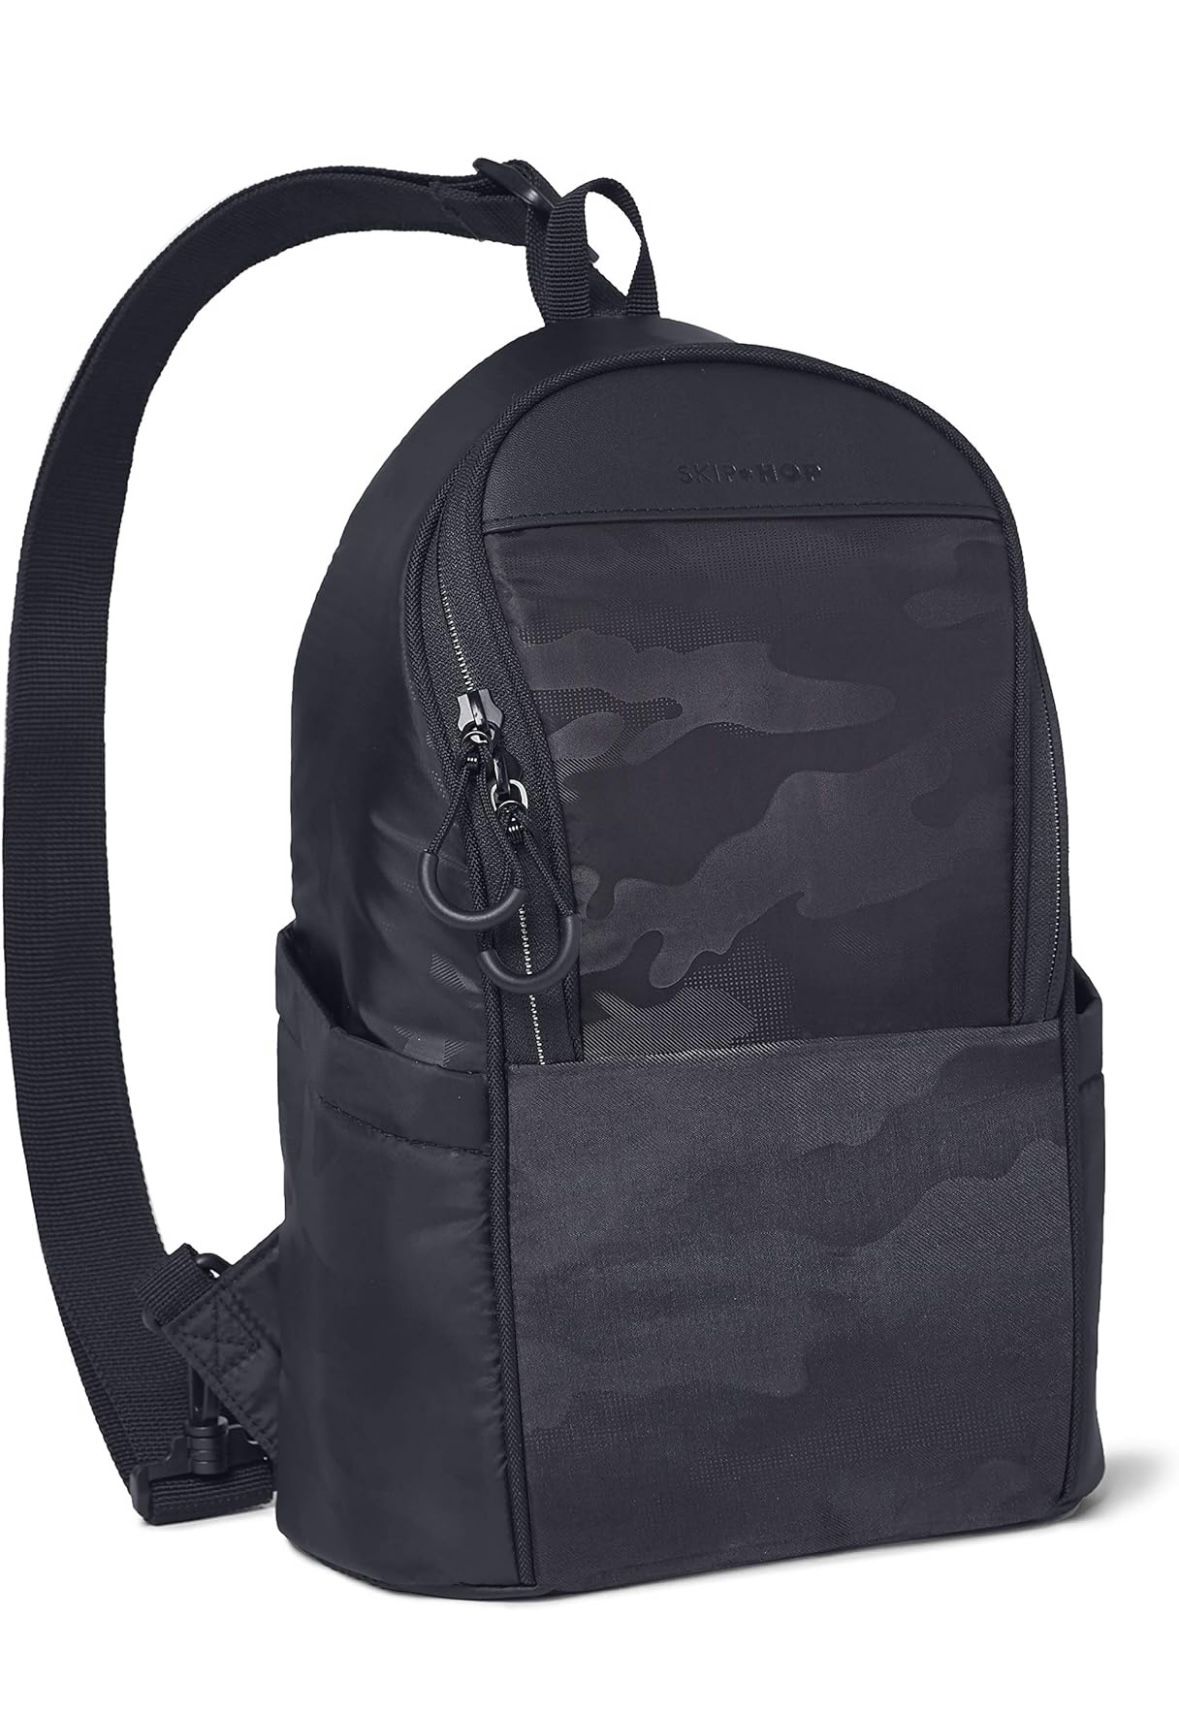 Skip Hop Diaper Bag Backpack Crossbody Sling - Black Camo